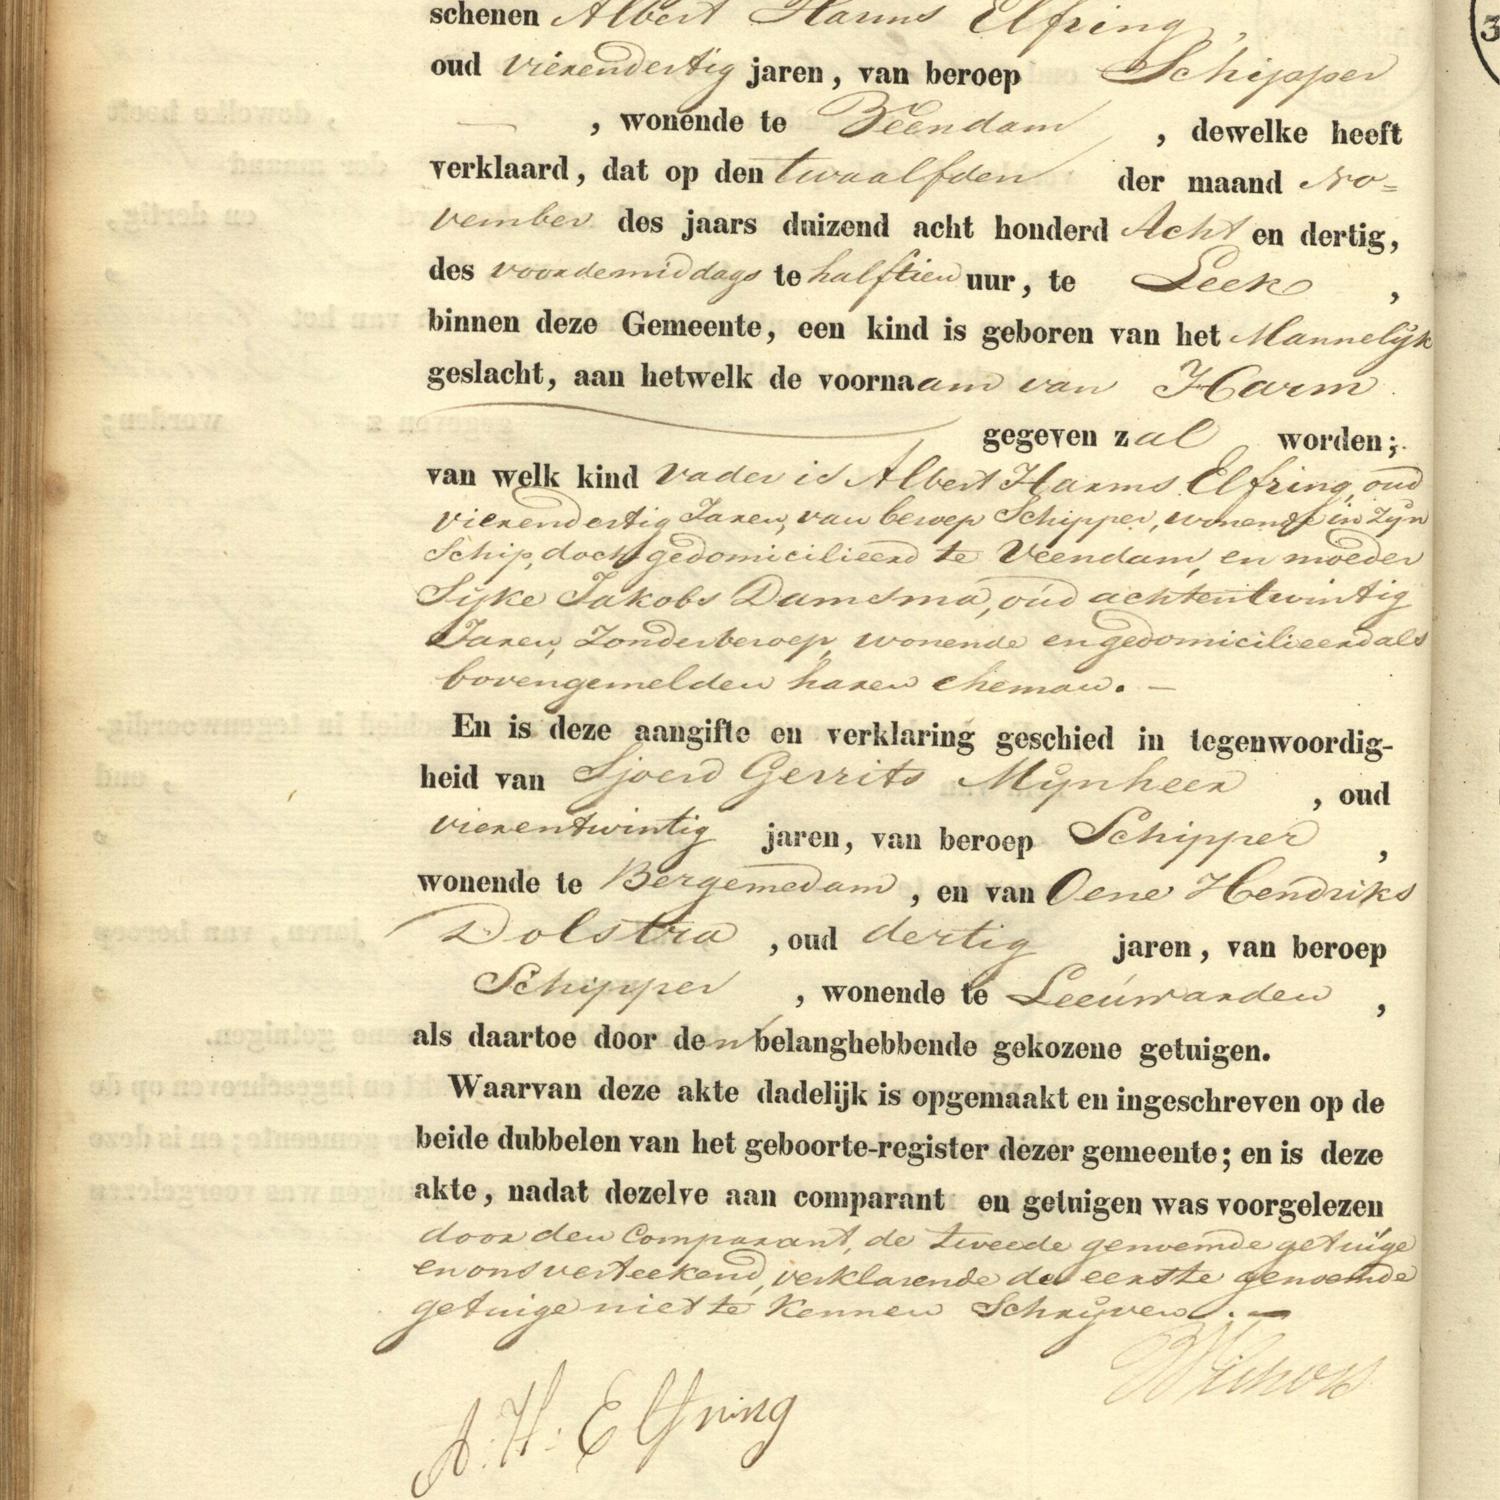 Civil registry of births, Leek, 1838, record 120